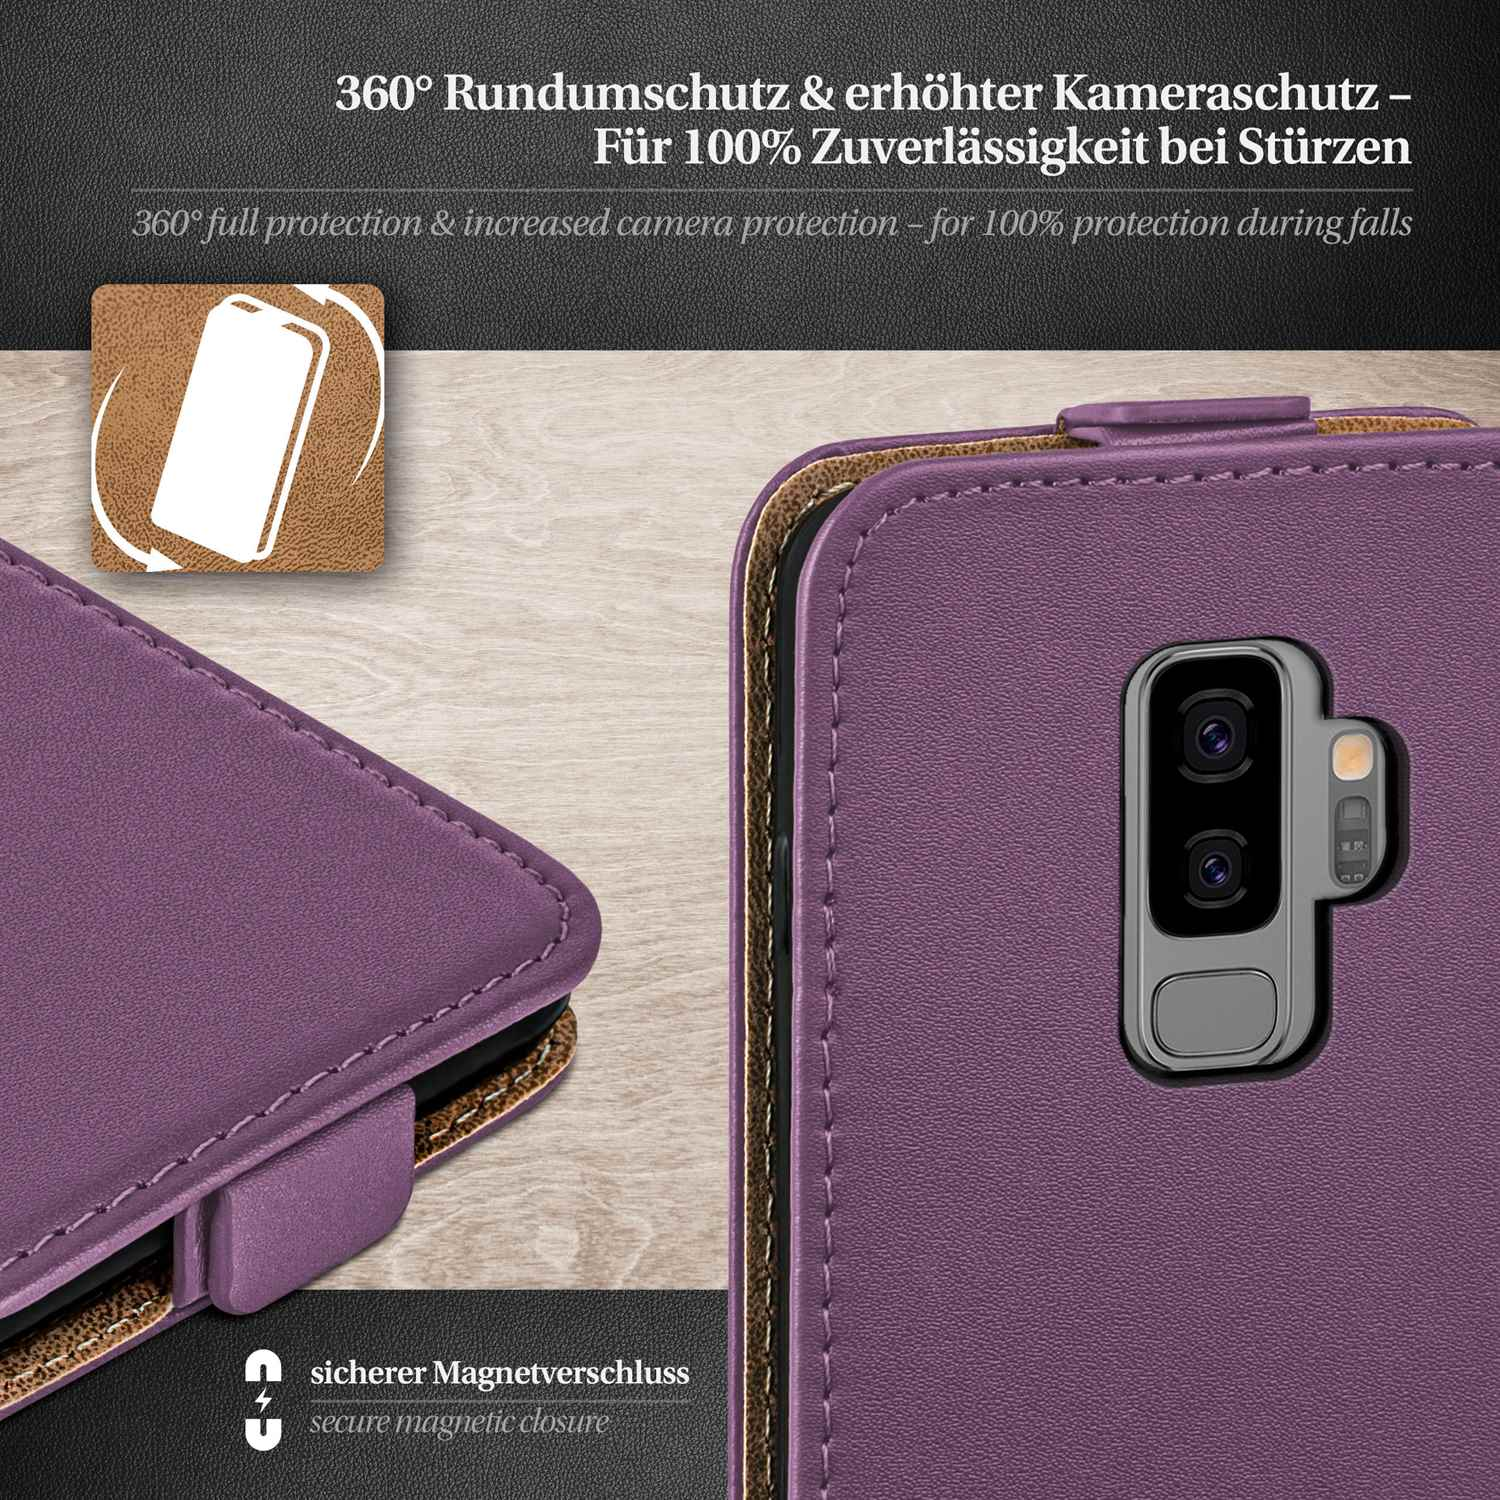 MOEX Flip Cover, Galaxy Indigo-Violet Plus, S9 Samsung, Case, Flip